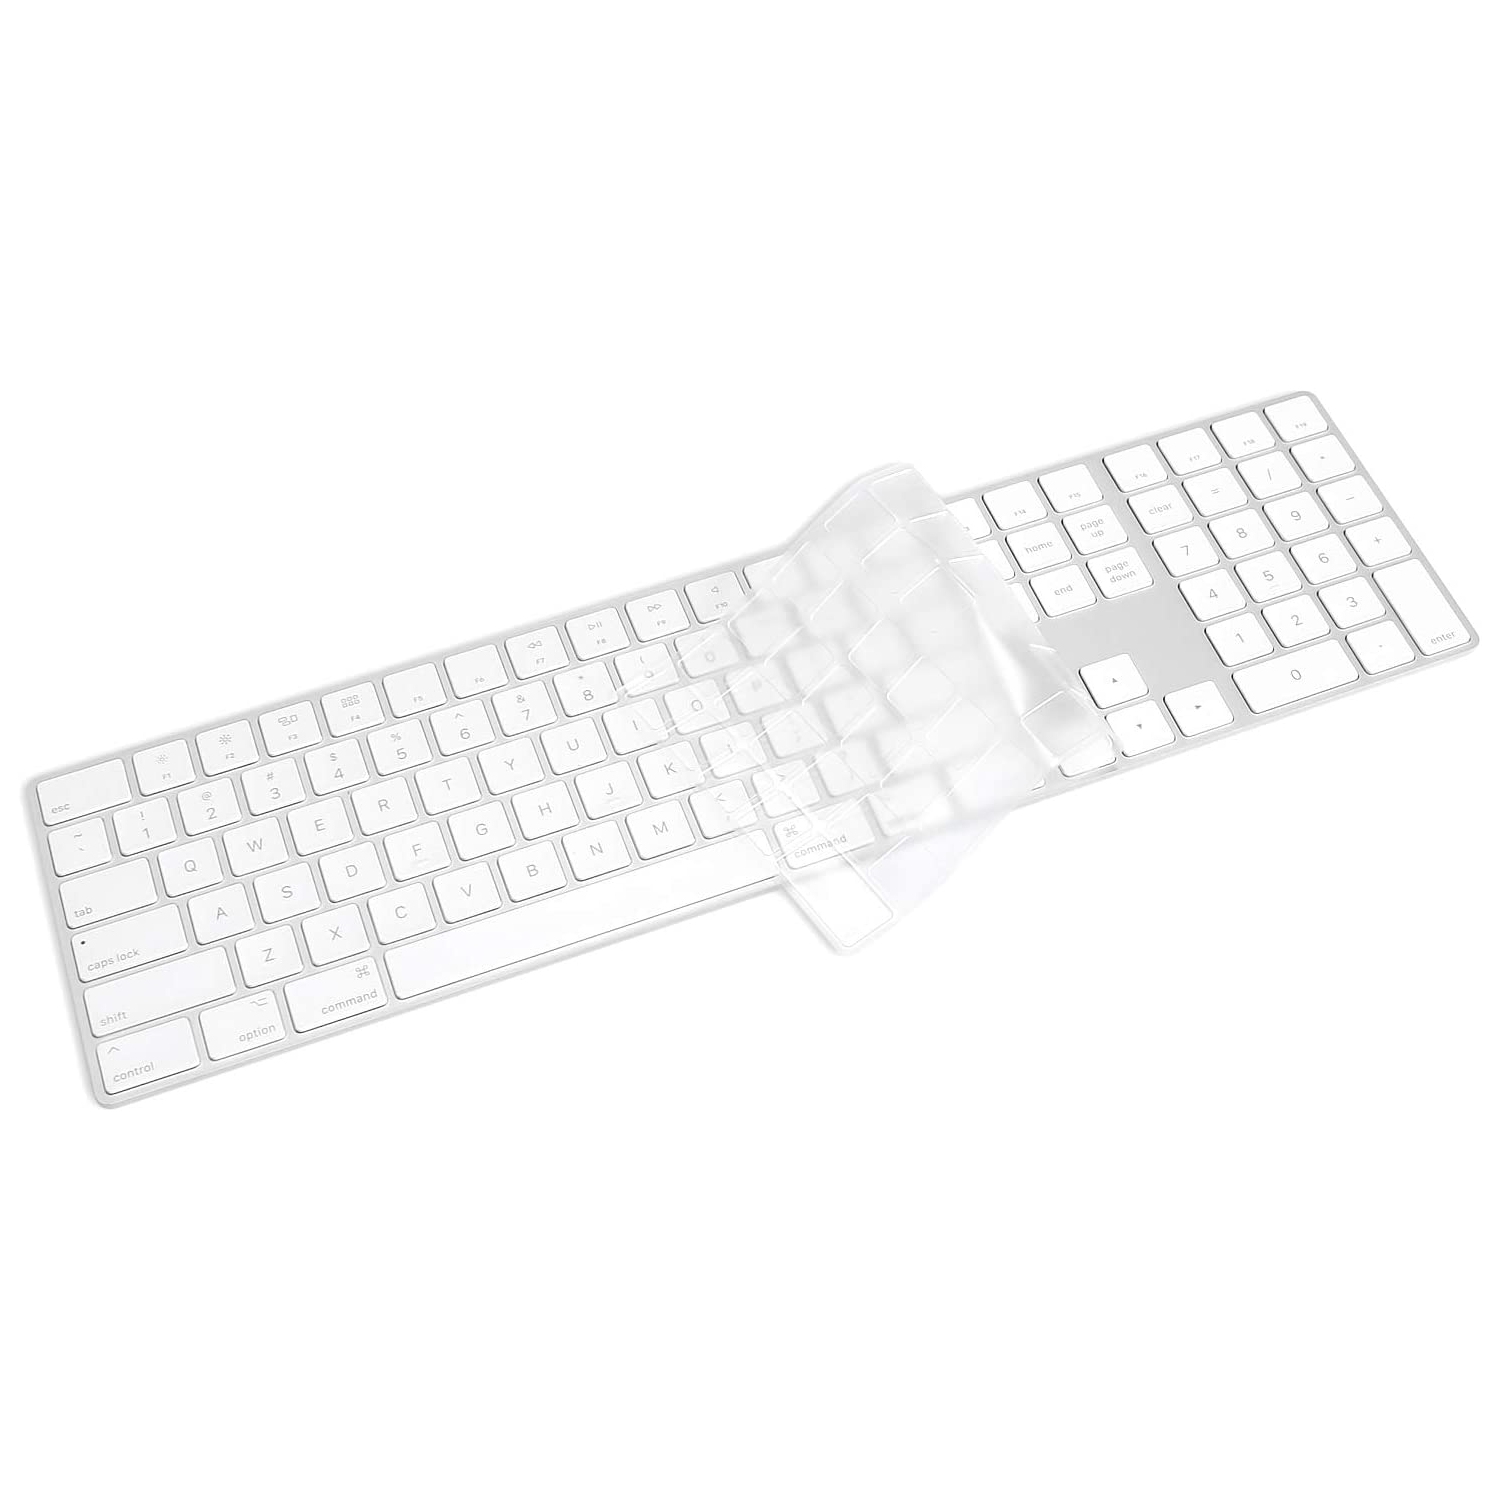 Keyboard Cover Skin for 2018-2017 Apple Magic Keyboard with Numeric Keypad A1843 US Enter MQ052LL/A Wireless Bluetooth Keyboard Ultra Thin Full Size TPU Protector, 0.13 mm